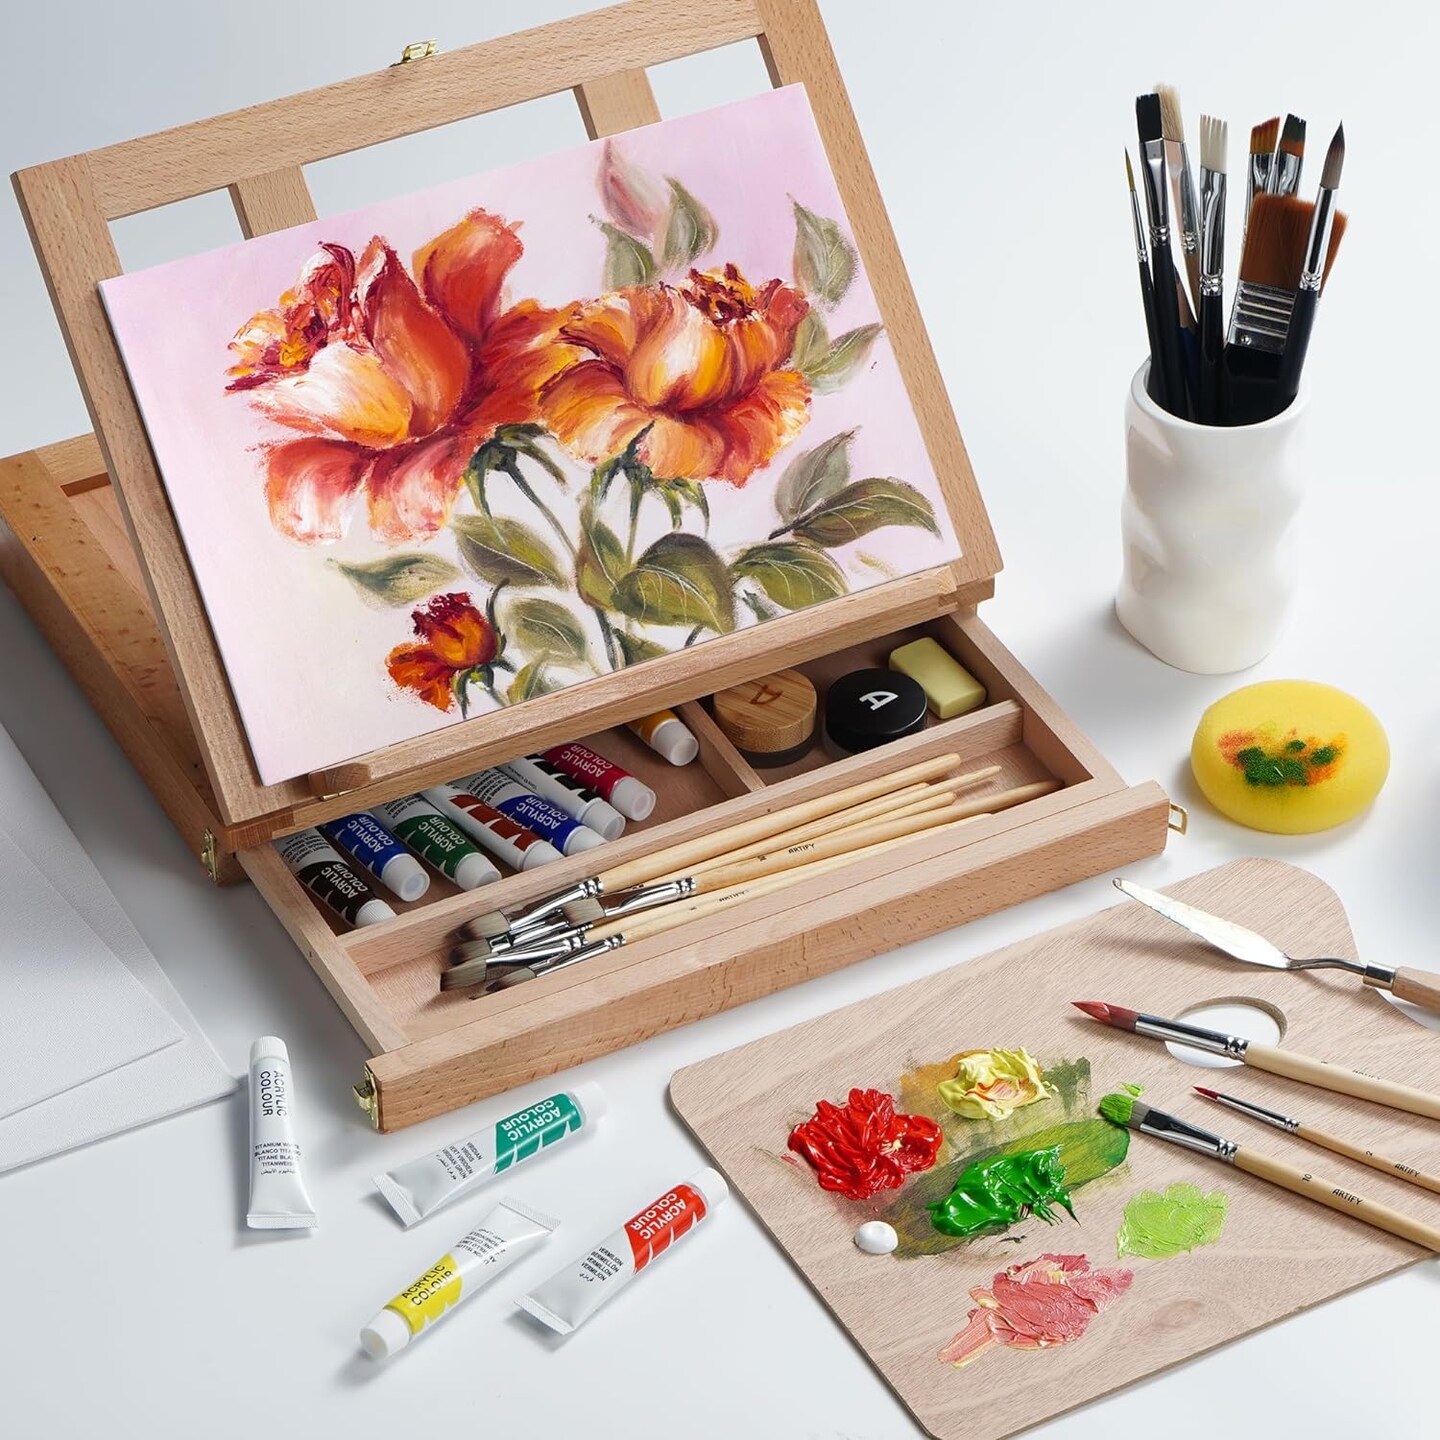 ARTIFY Table Easel Set, Desktop Artist Easel with 12 Colors Acrylic Paints, 13Pcs Brushes, 3 Canvas Panels, 1Pcs Wood Palette and 1Pcs Palette Knives, Gift for Artists, Kids, Adults